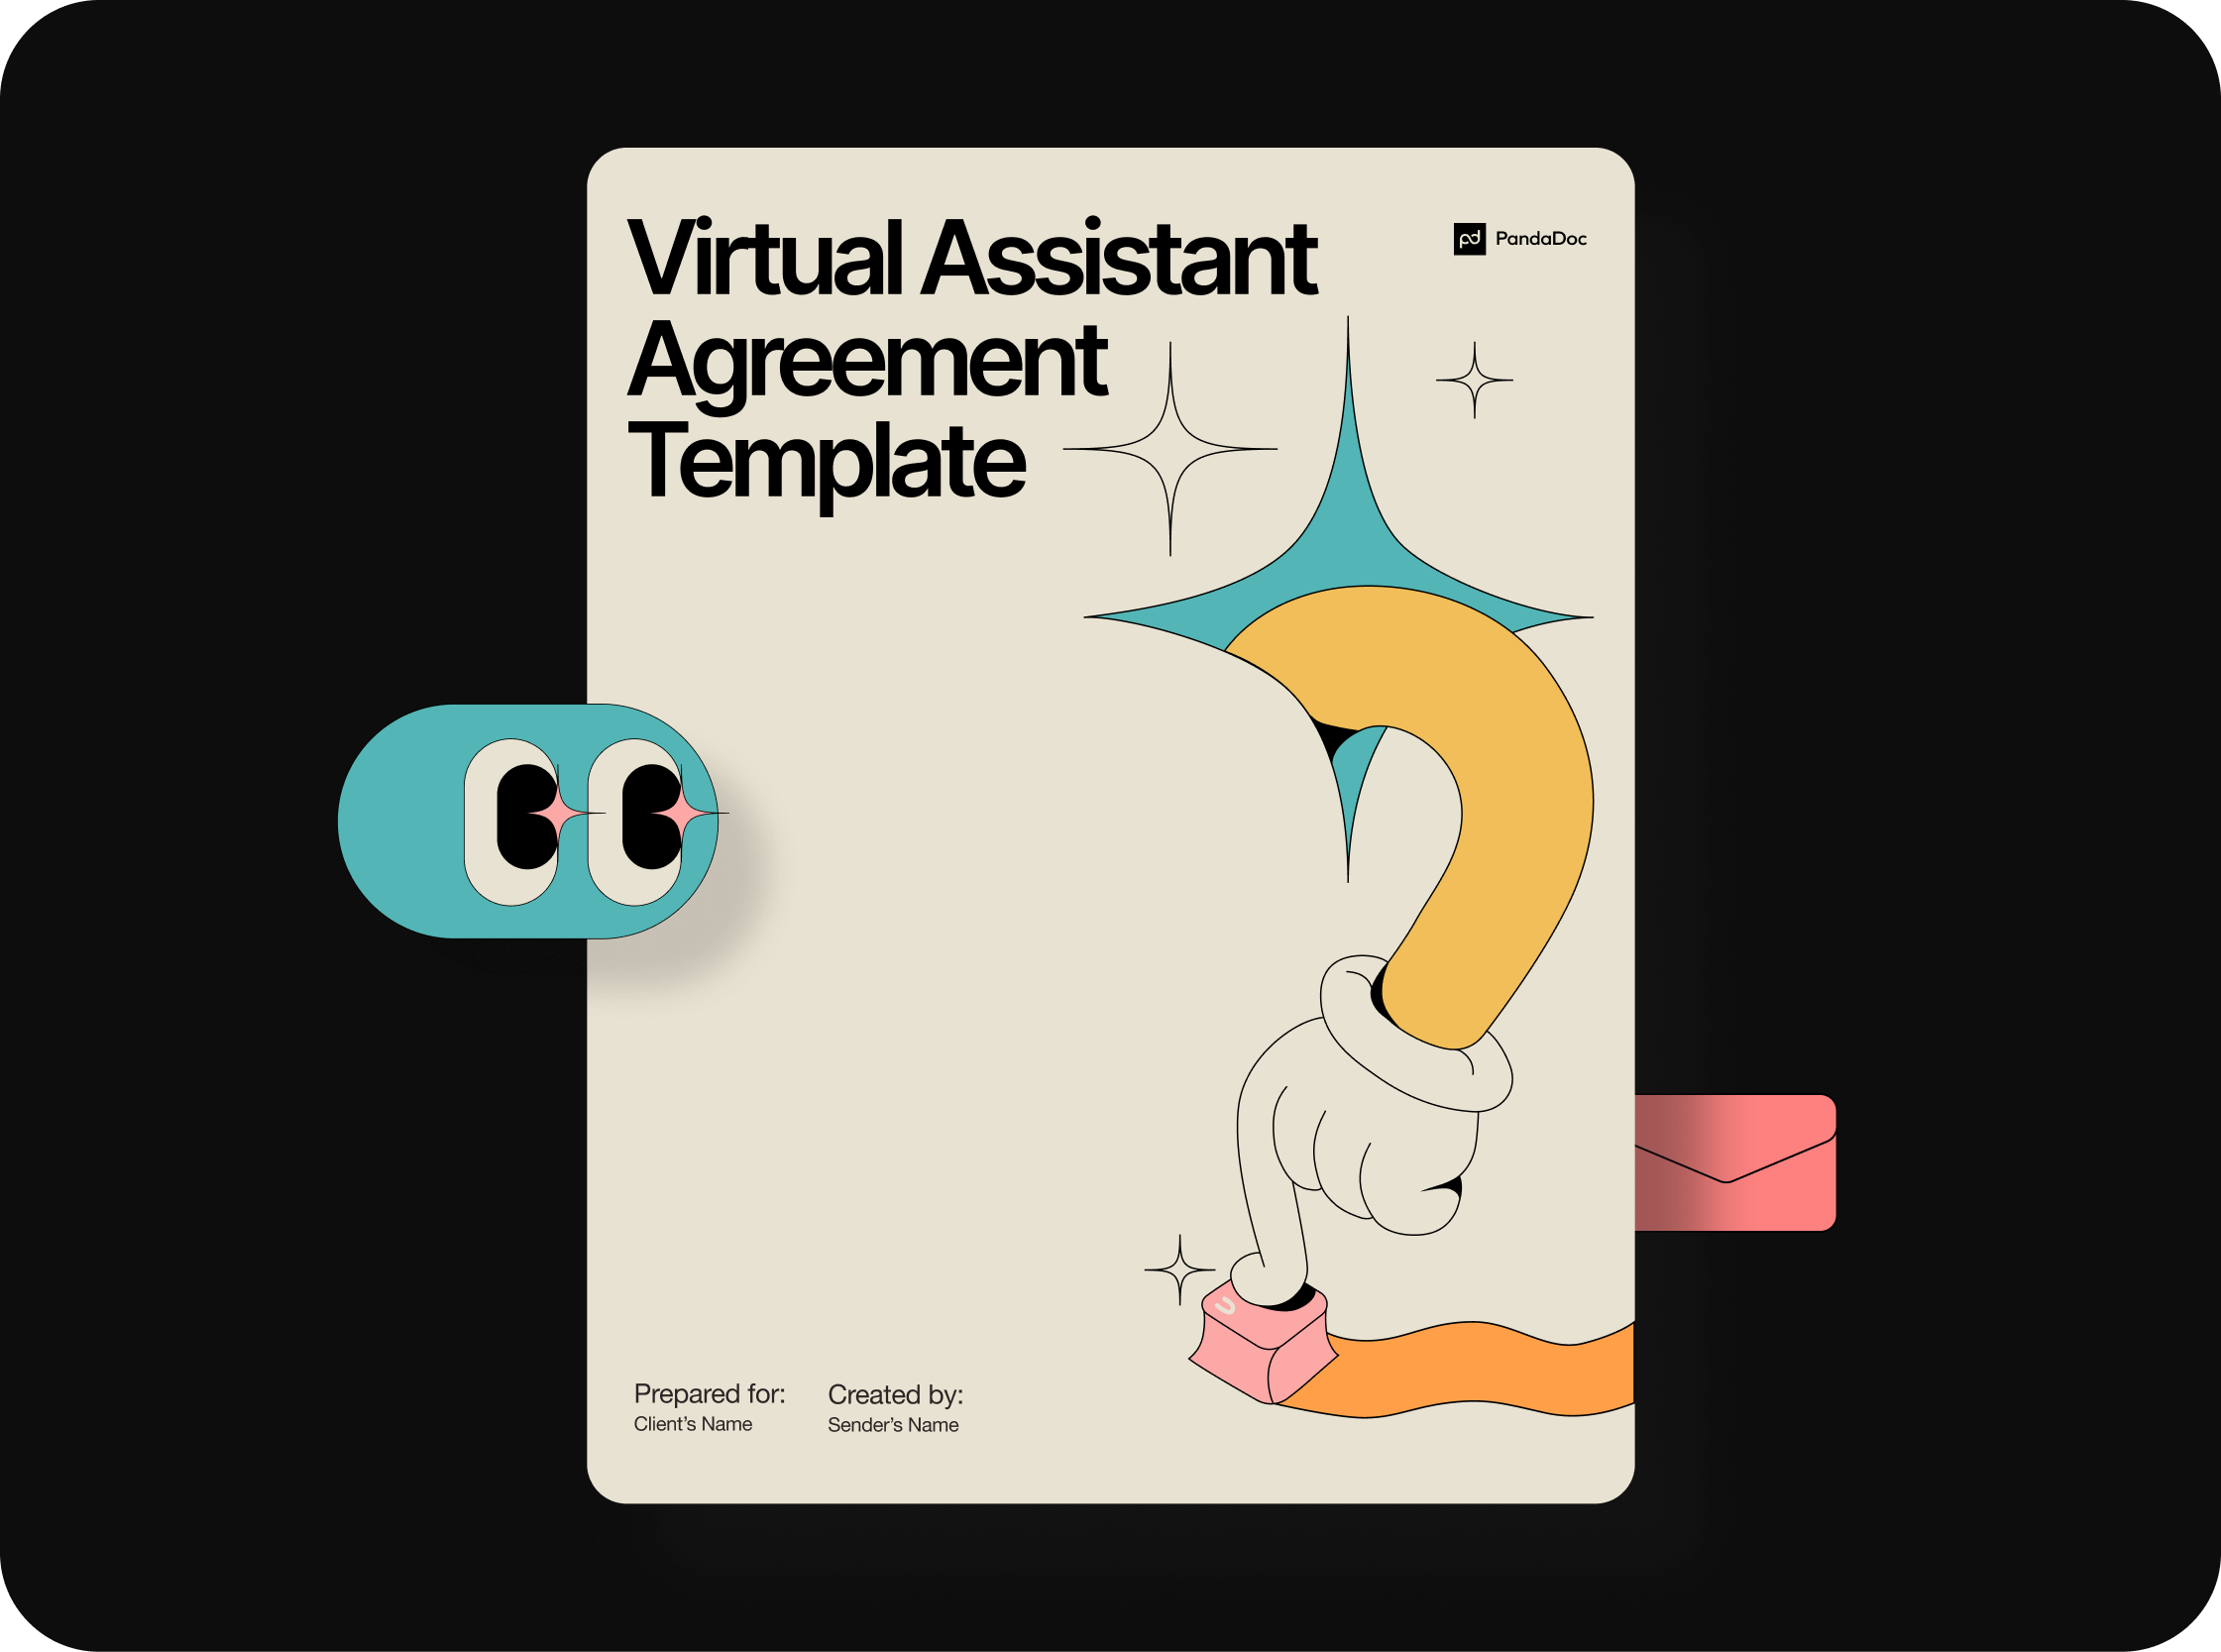 Virtual Assistant Agreement PandaDoc (1)